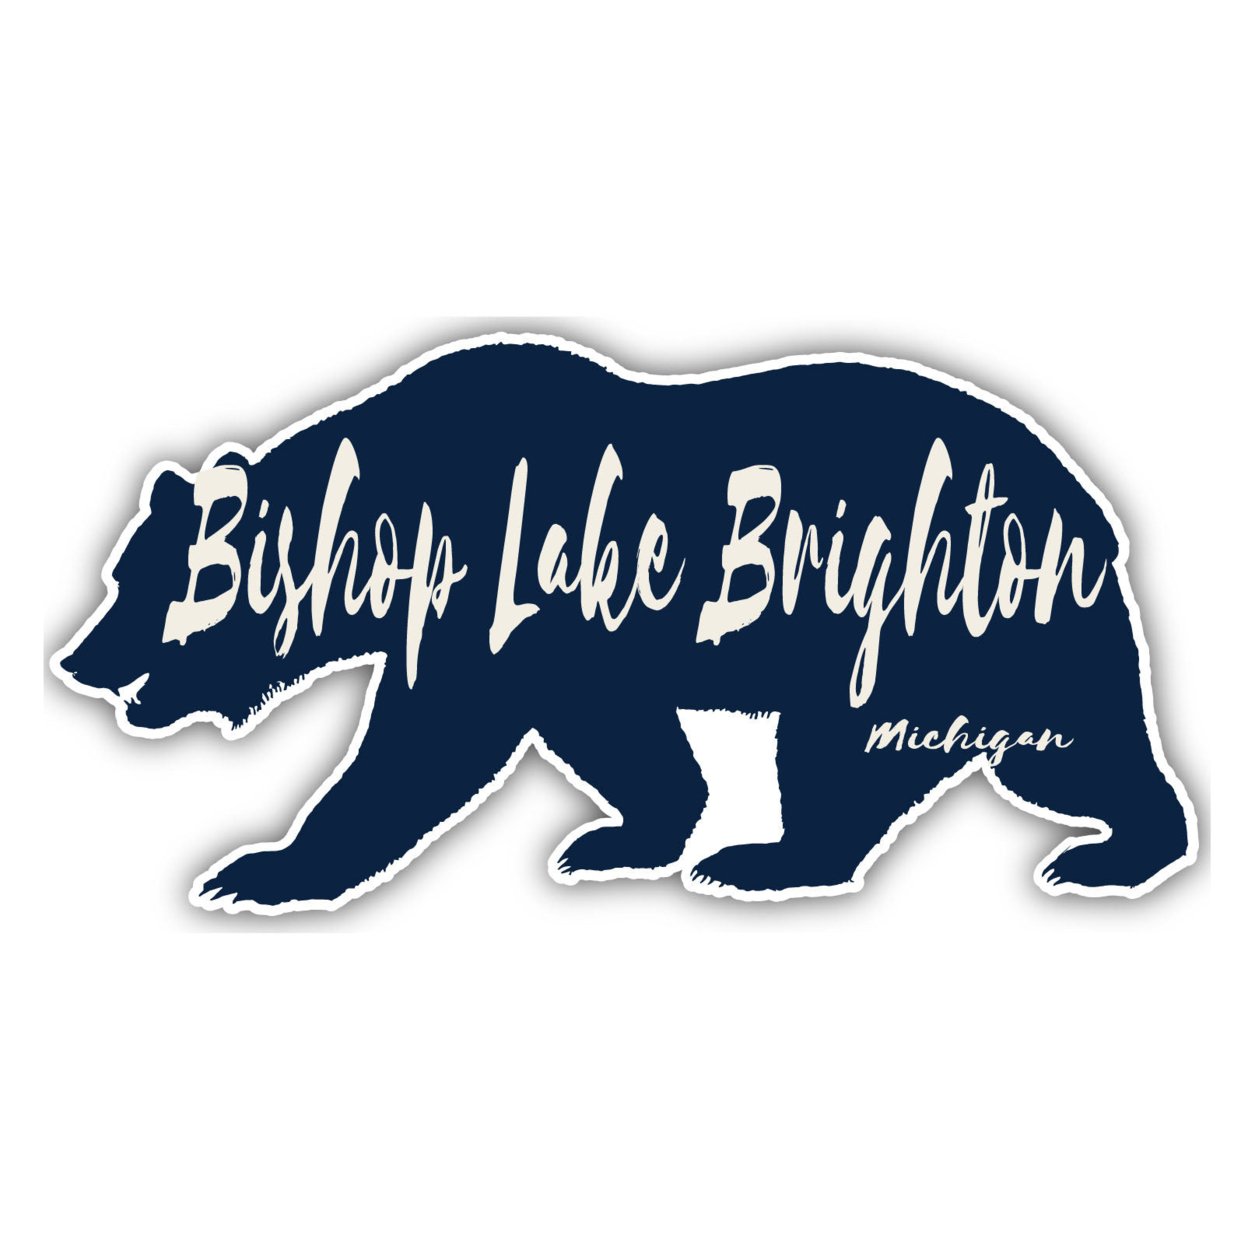 Bishop Lake Brighton Michigan Souvenir Decorative Stickers (Choose Theme And Size) - Single Unit, 6-Inch, Bear